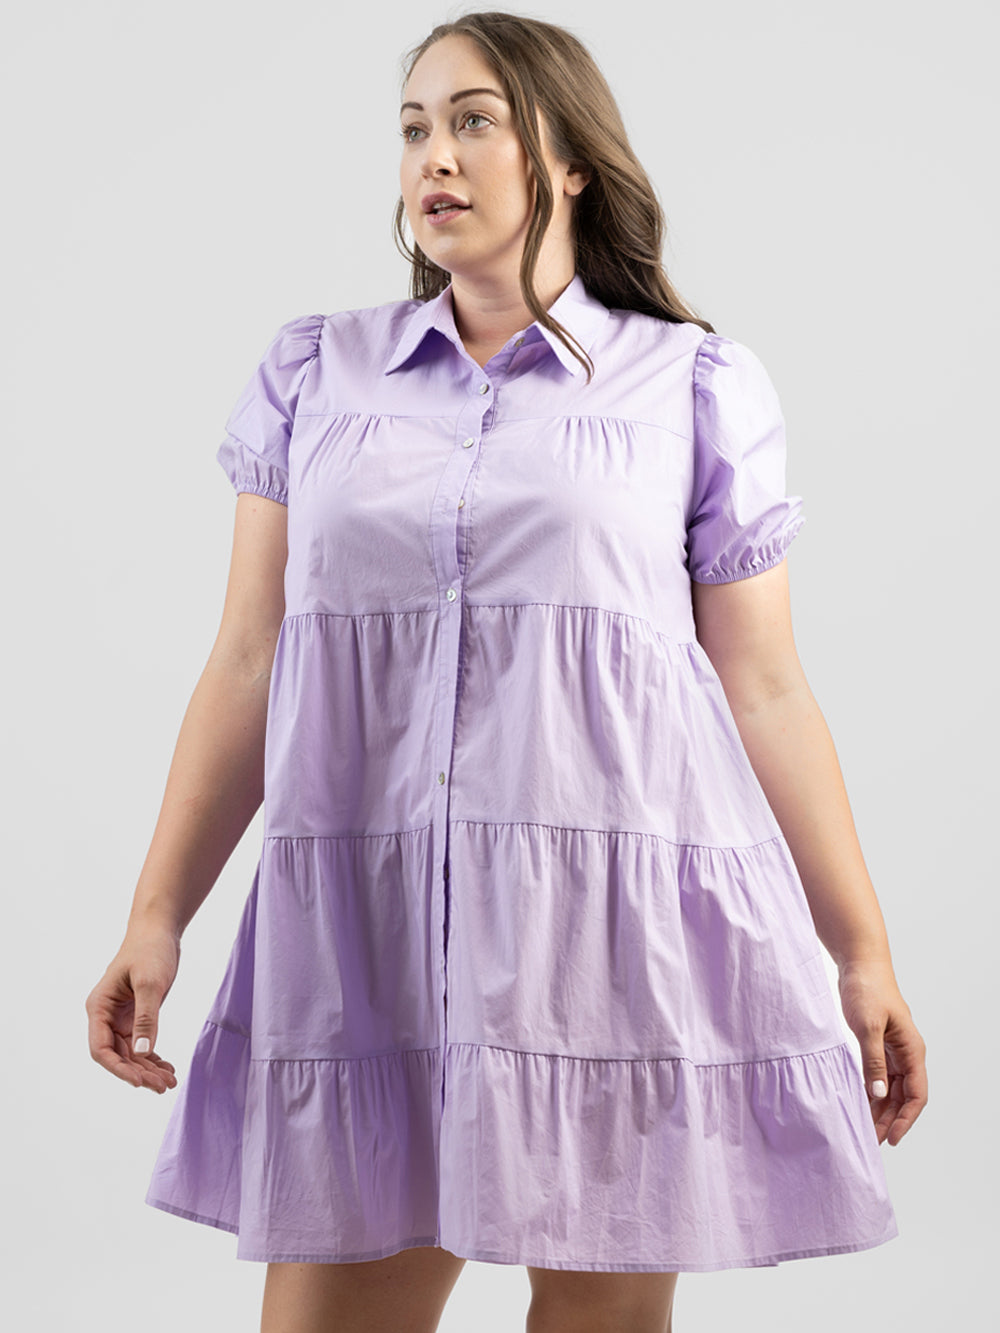 American Bling Women Tiered Long Sleeve Shirt Smock Dress - Montana West World